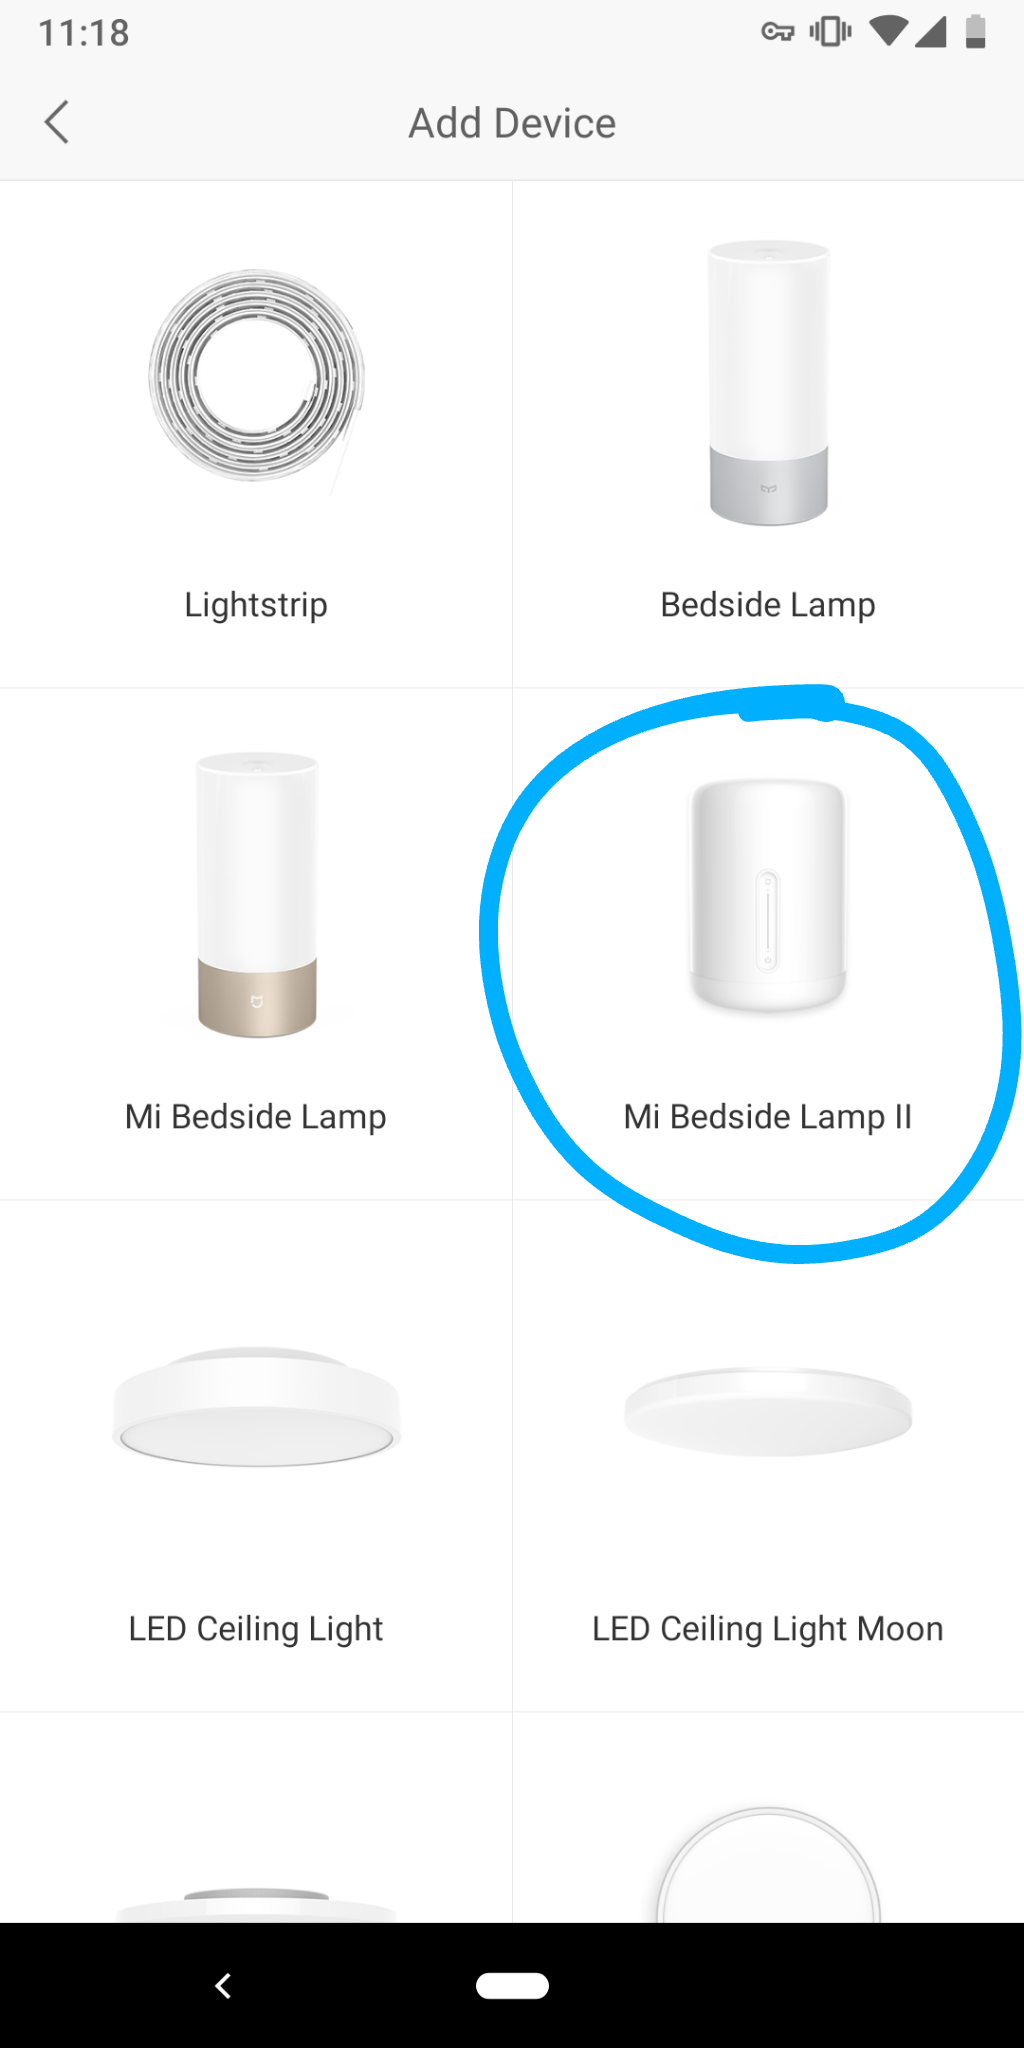 Does Mi Bedside Lamp II support Google 